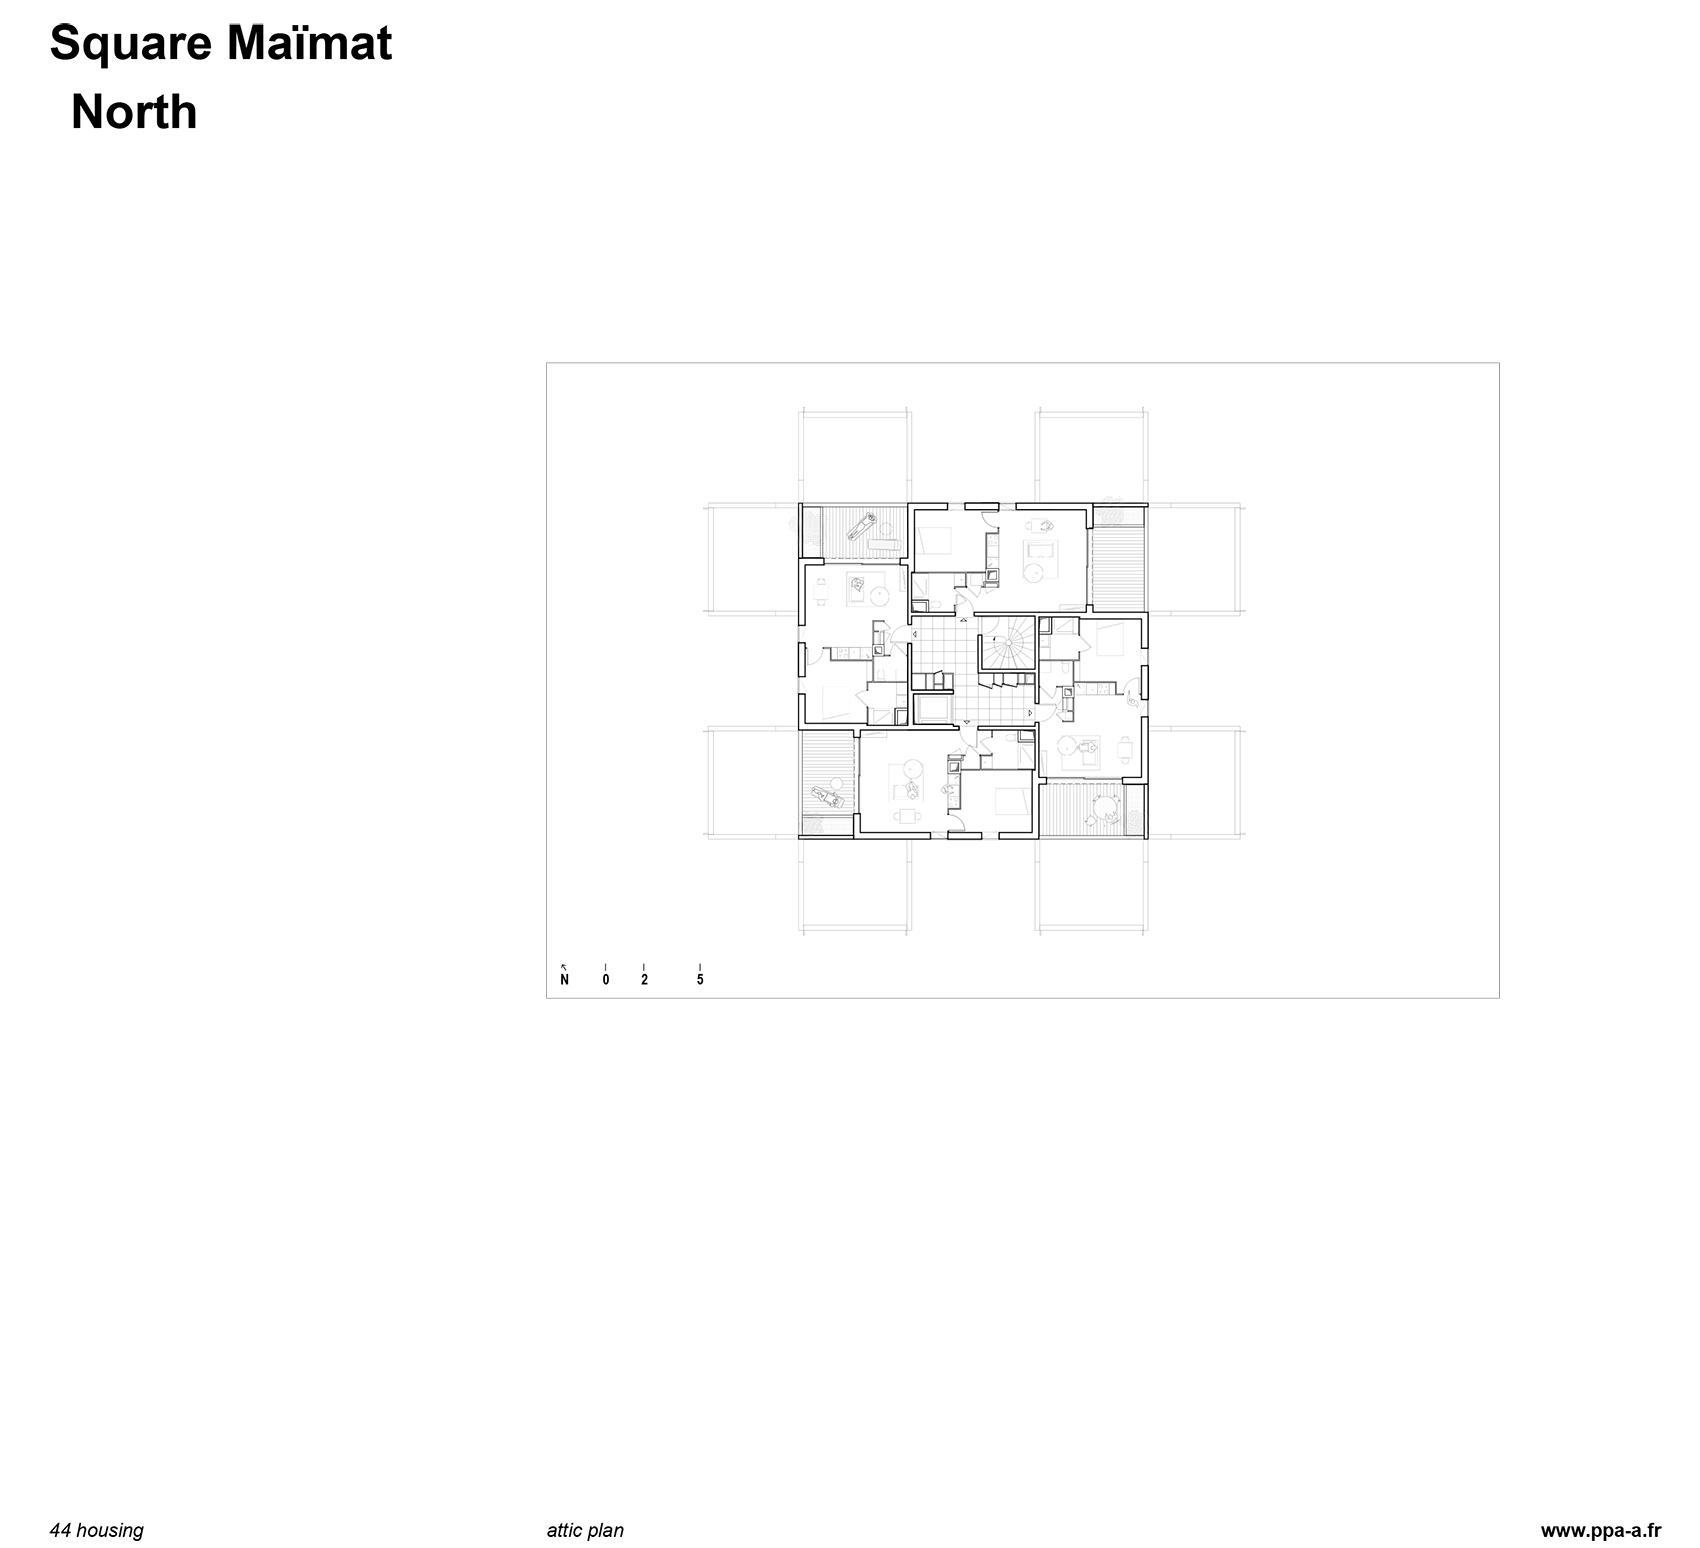 Square Maïmat住宅区更新，法国/释放公共空间，连接社区居民-113